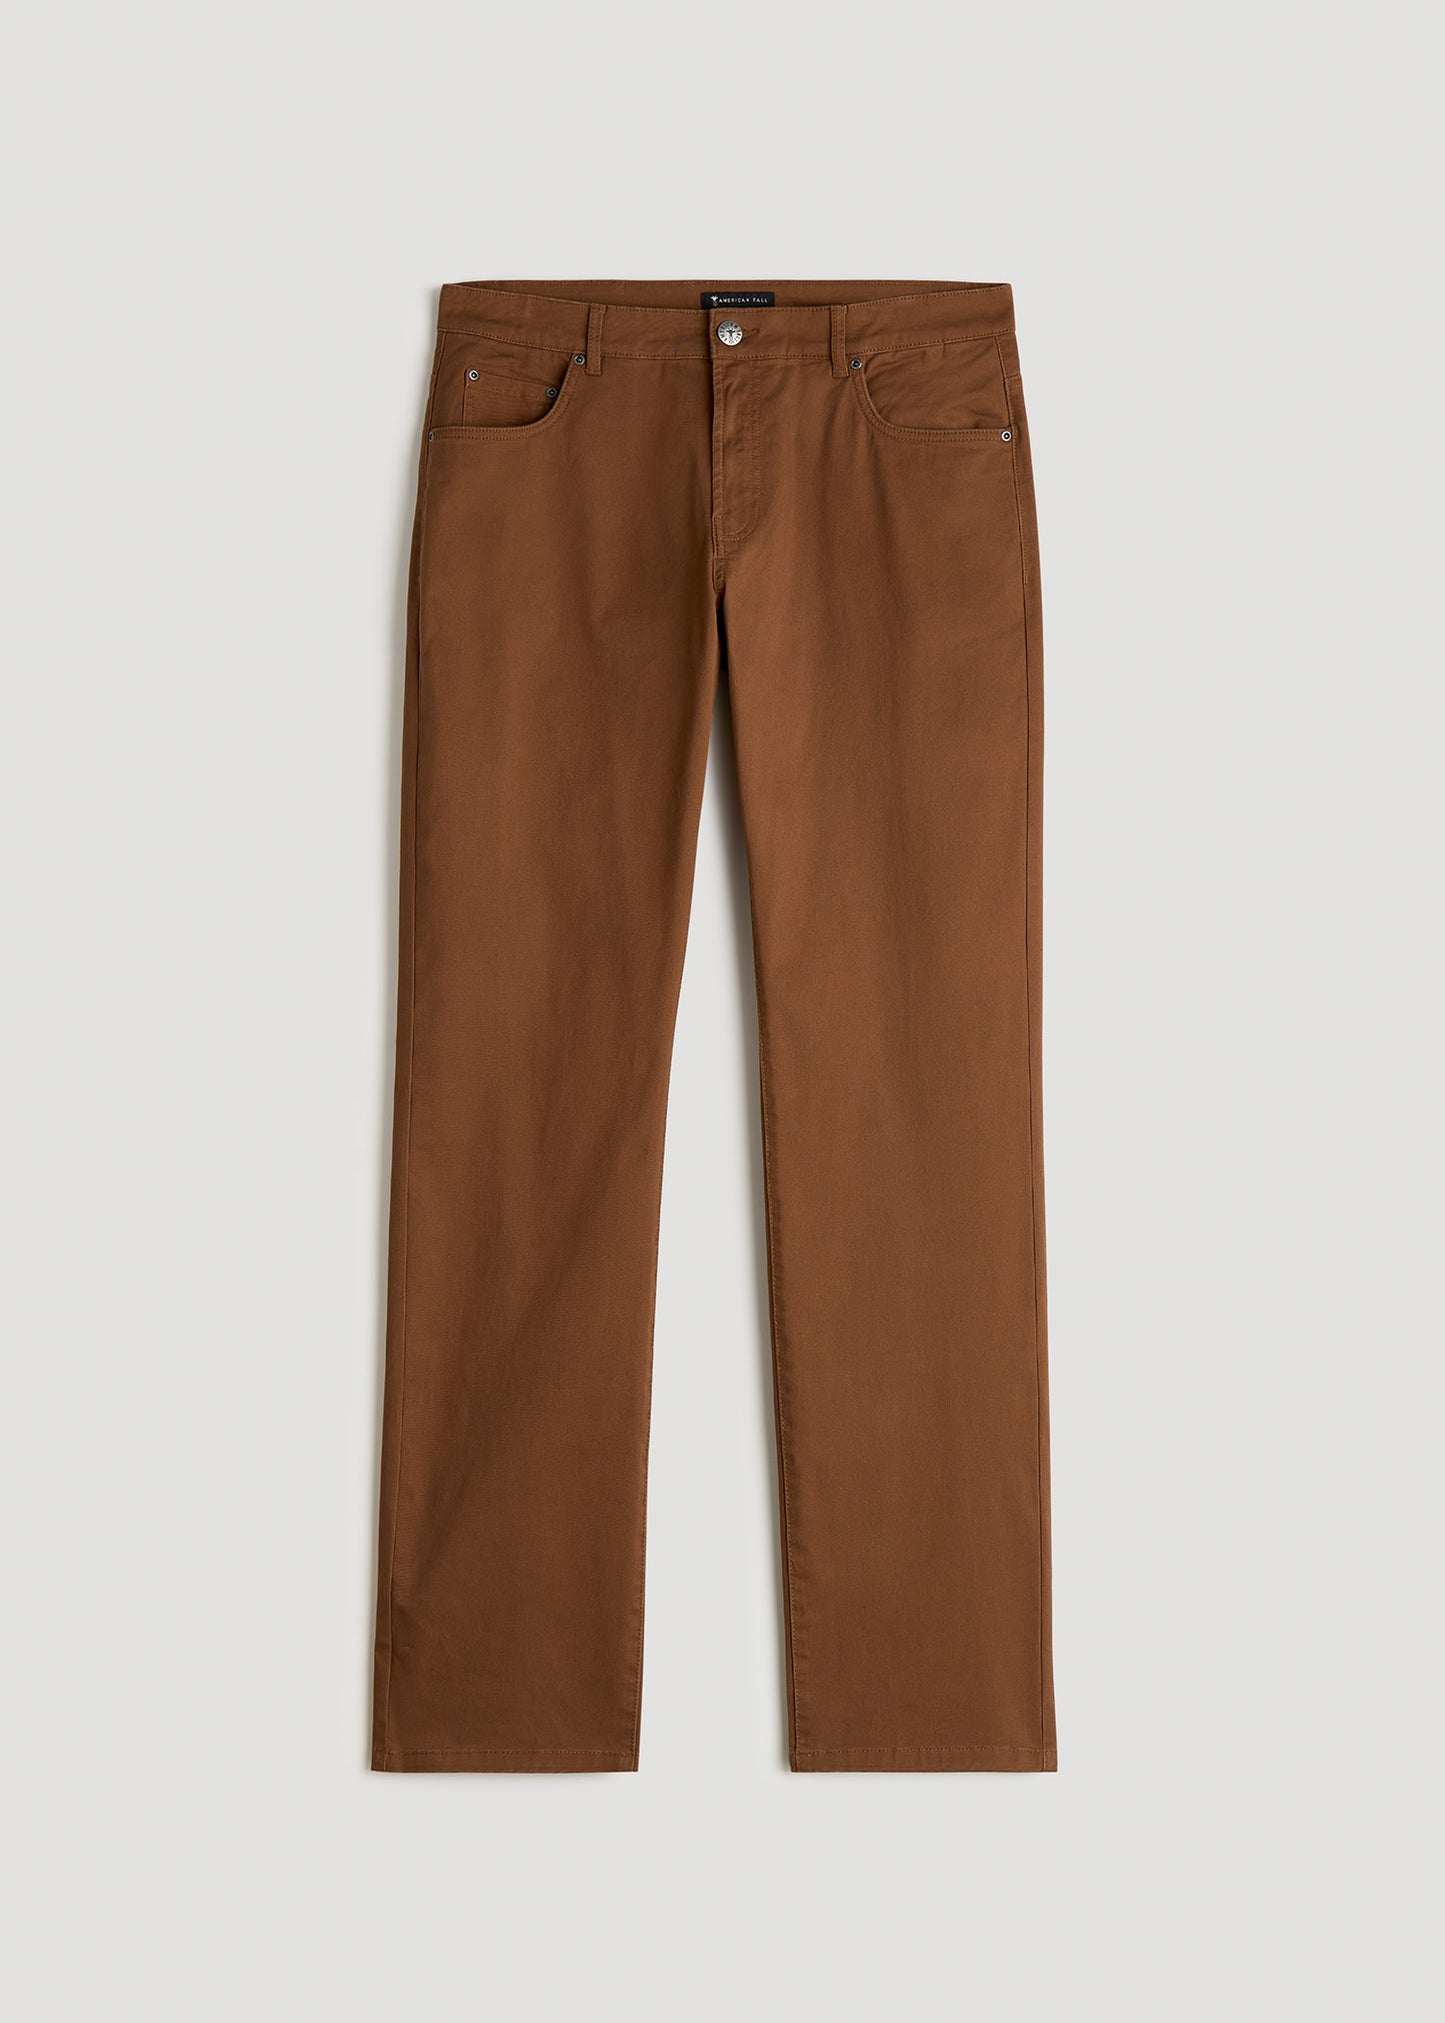 J1 STRAIGHT Leg Five-Pocket Pants for Tall Men in Camo Green